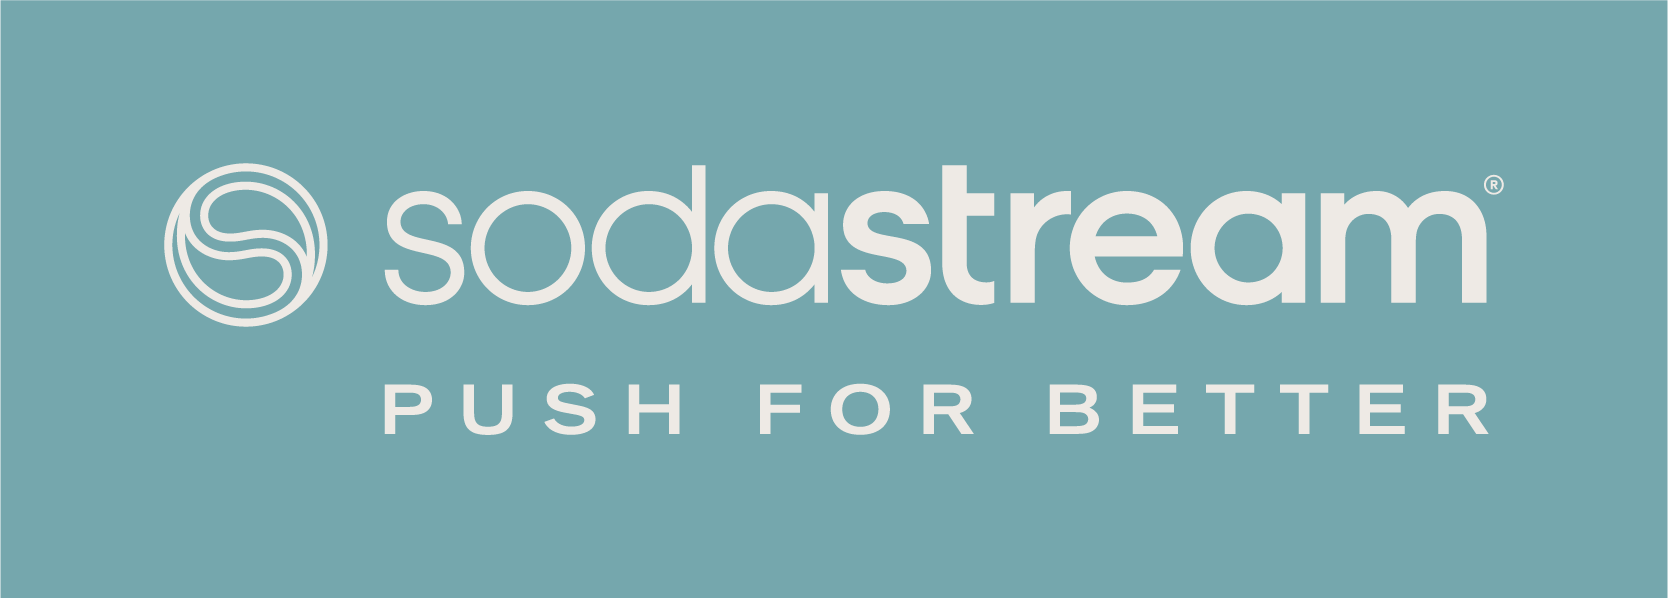 logo sodastream